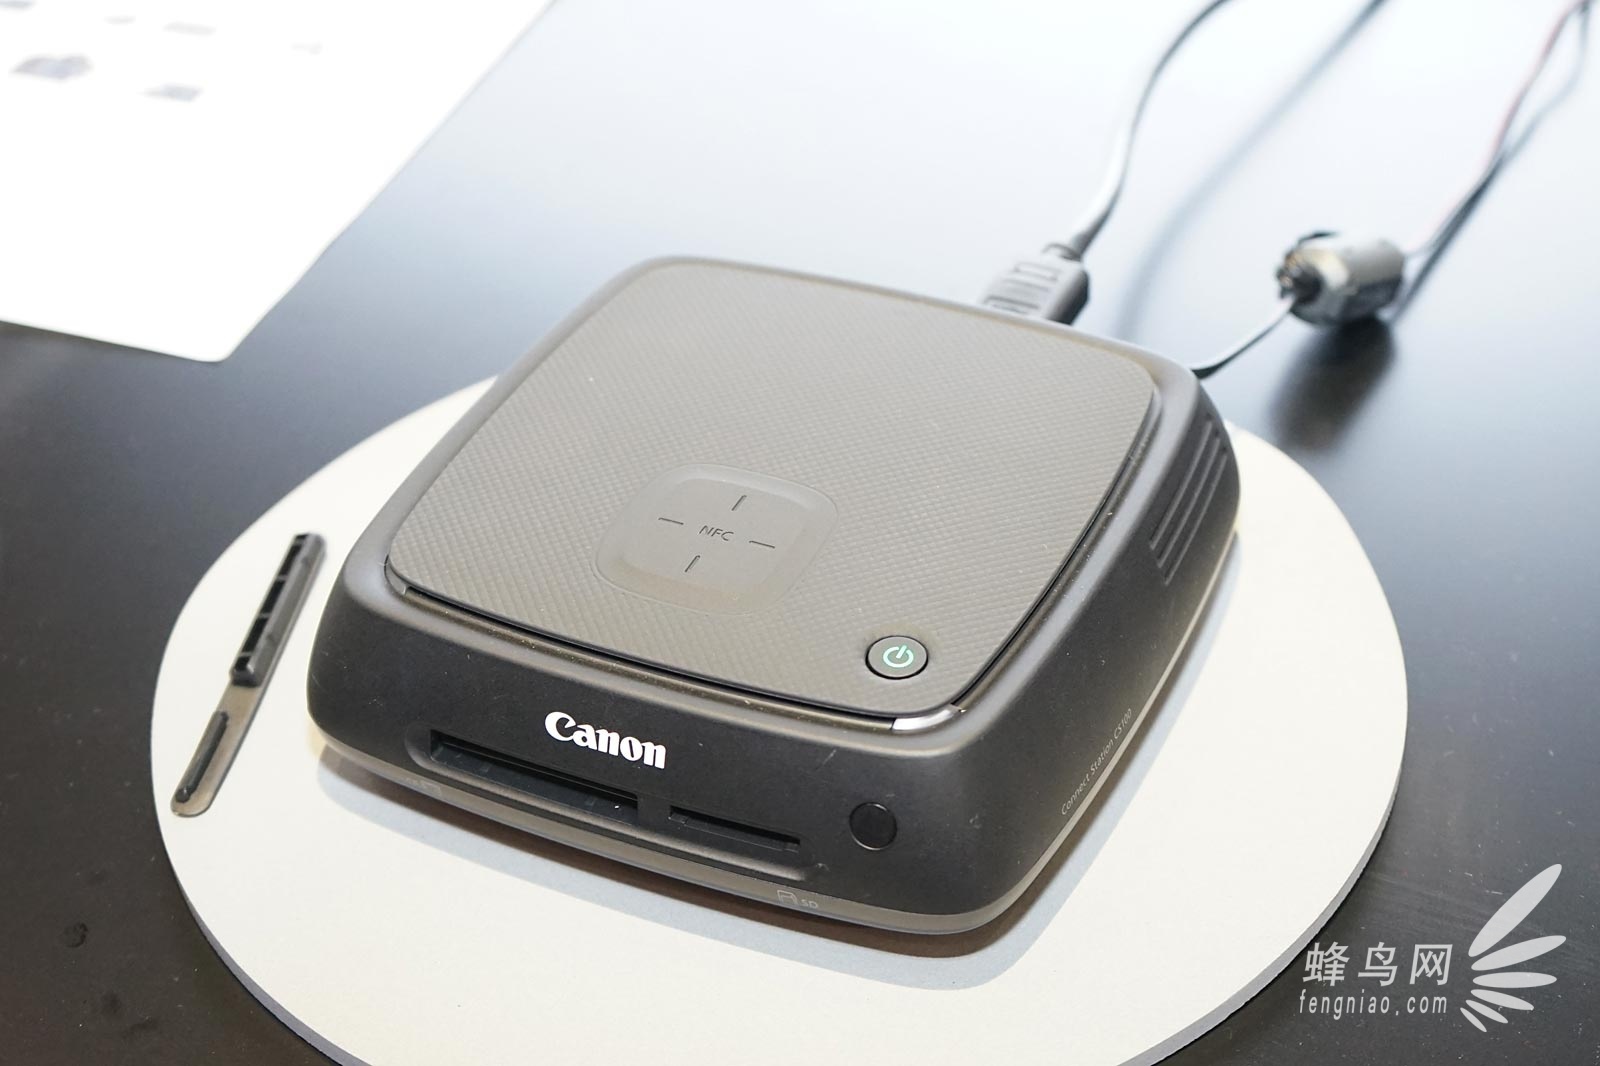 CP+2015:佳能展台影像存储器CS100亮相